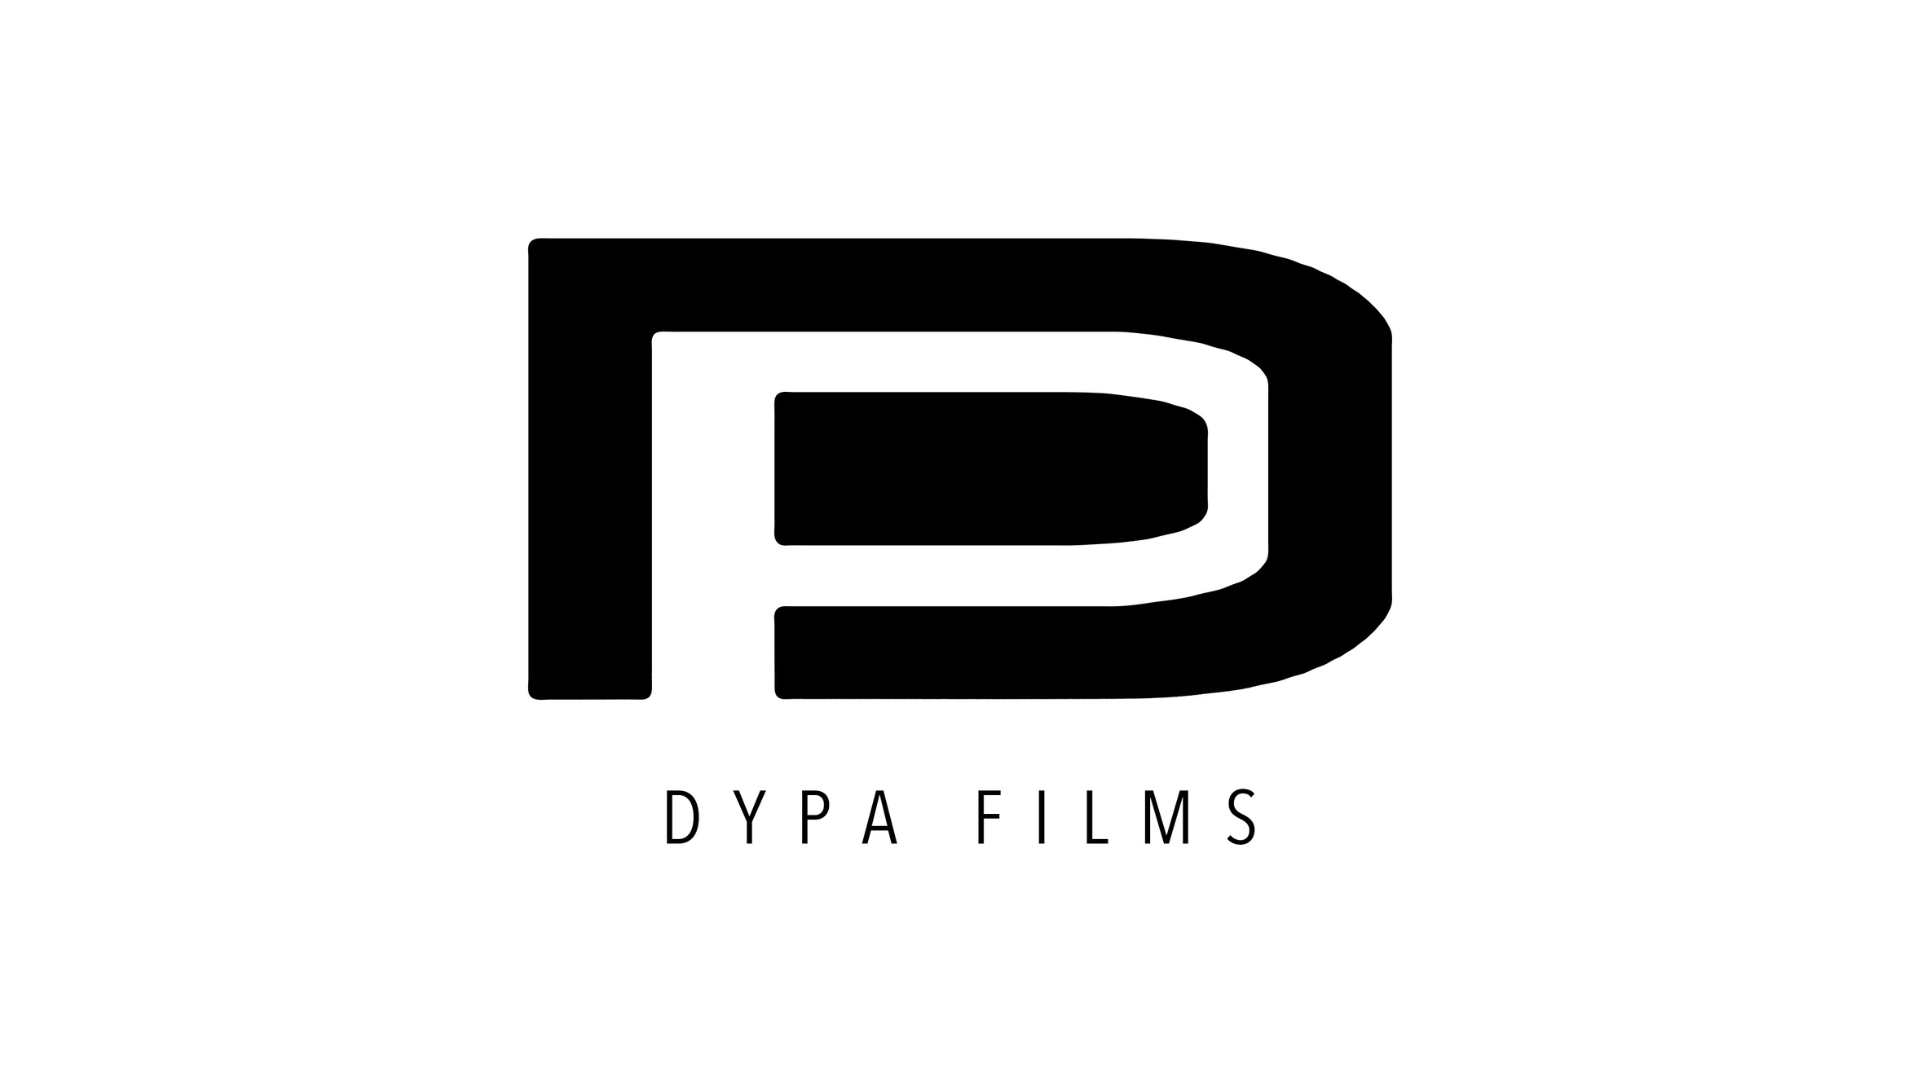 Dypa films